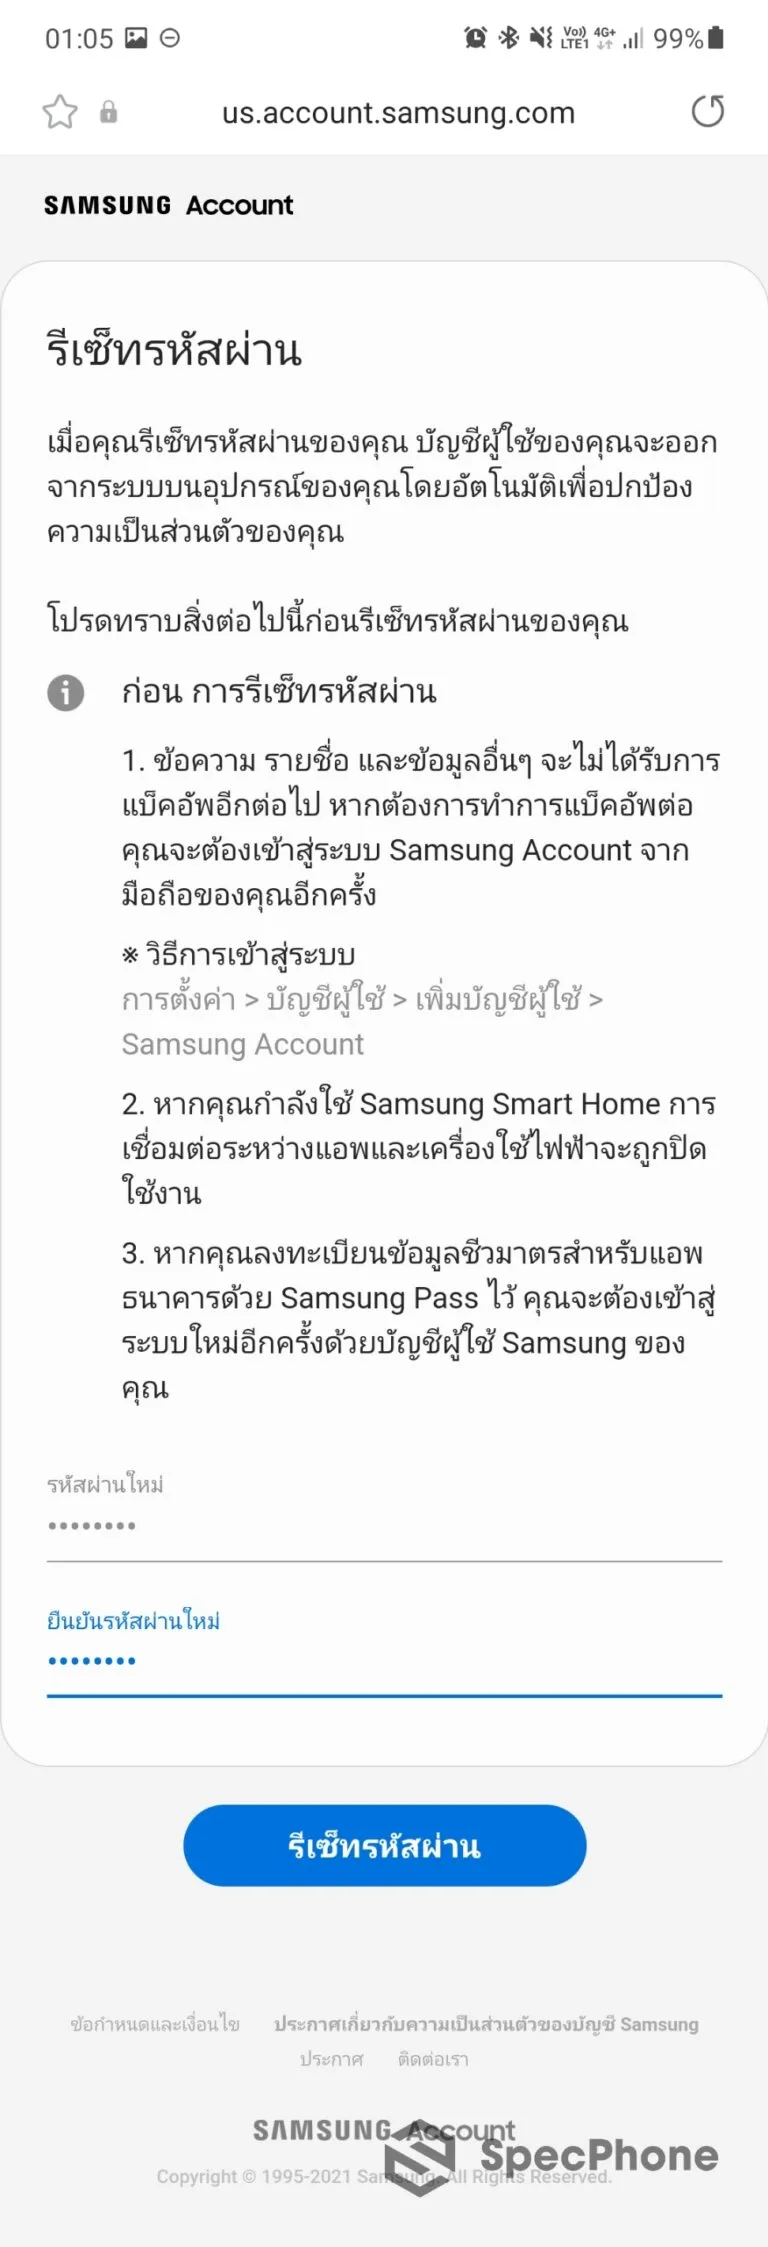 Samsung Account 16 1